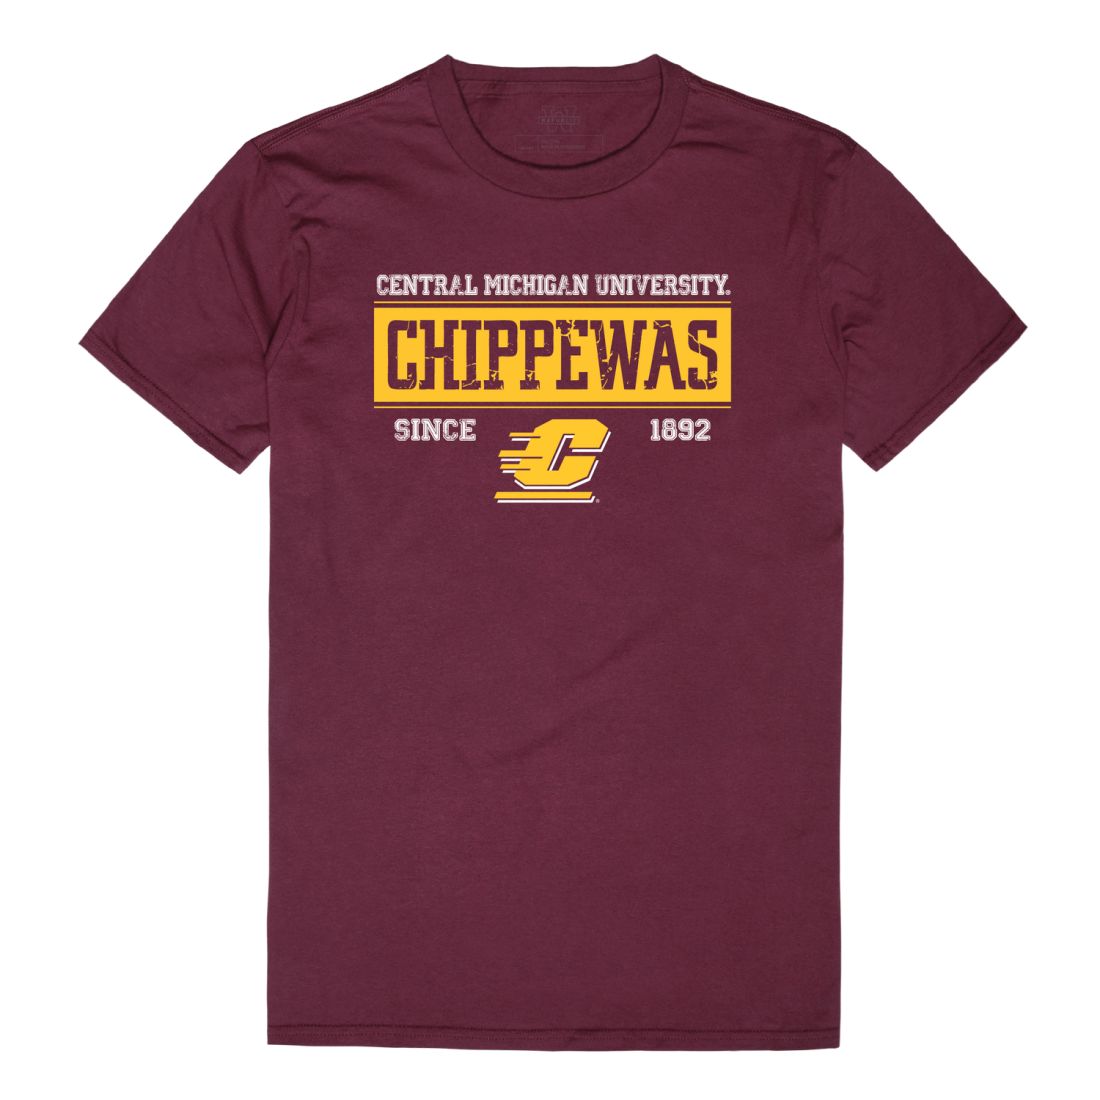 CMU Central Michigan University Chippewas Established T-Shirt